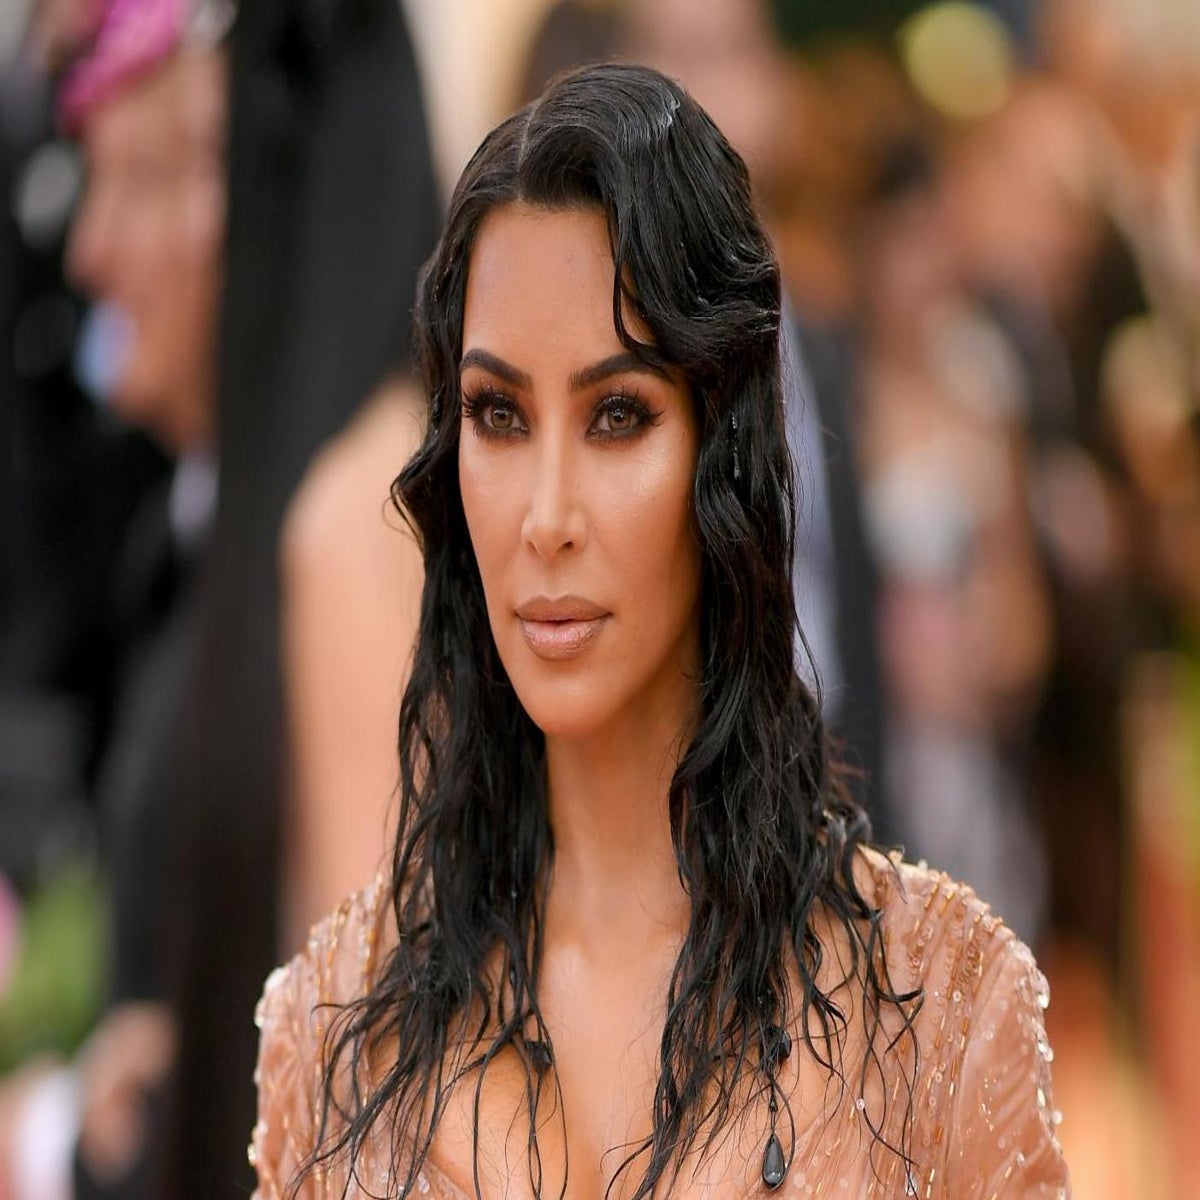 Kim Kardashian to drop Kimono name from shapewear after